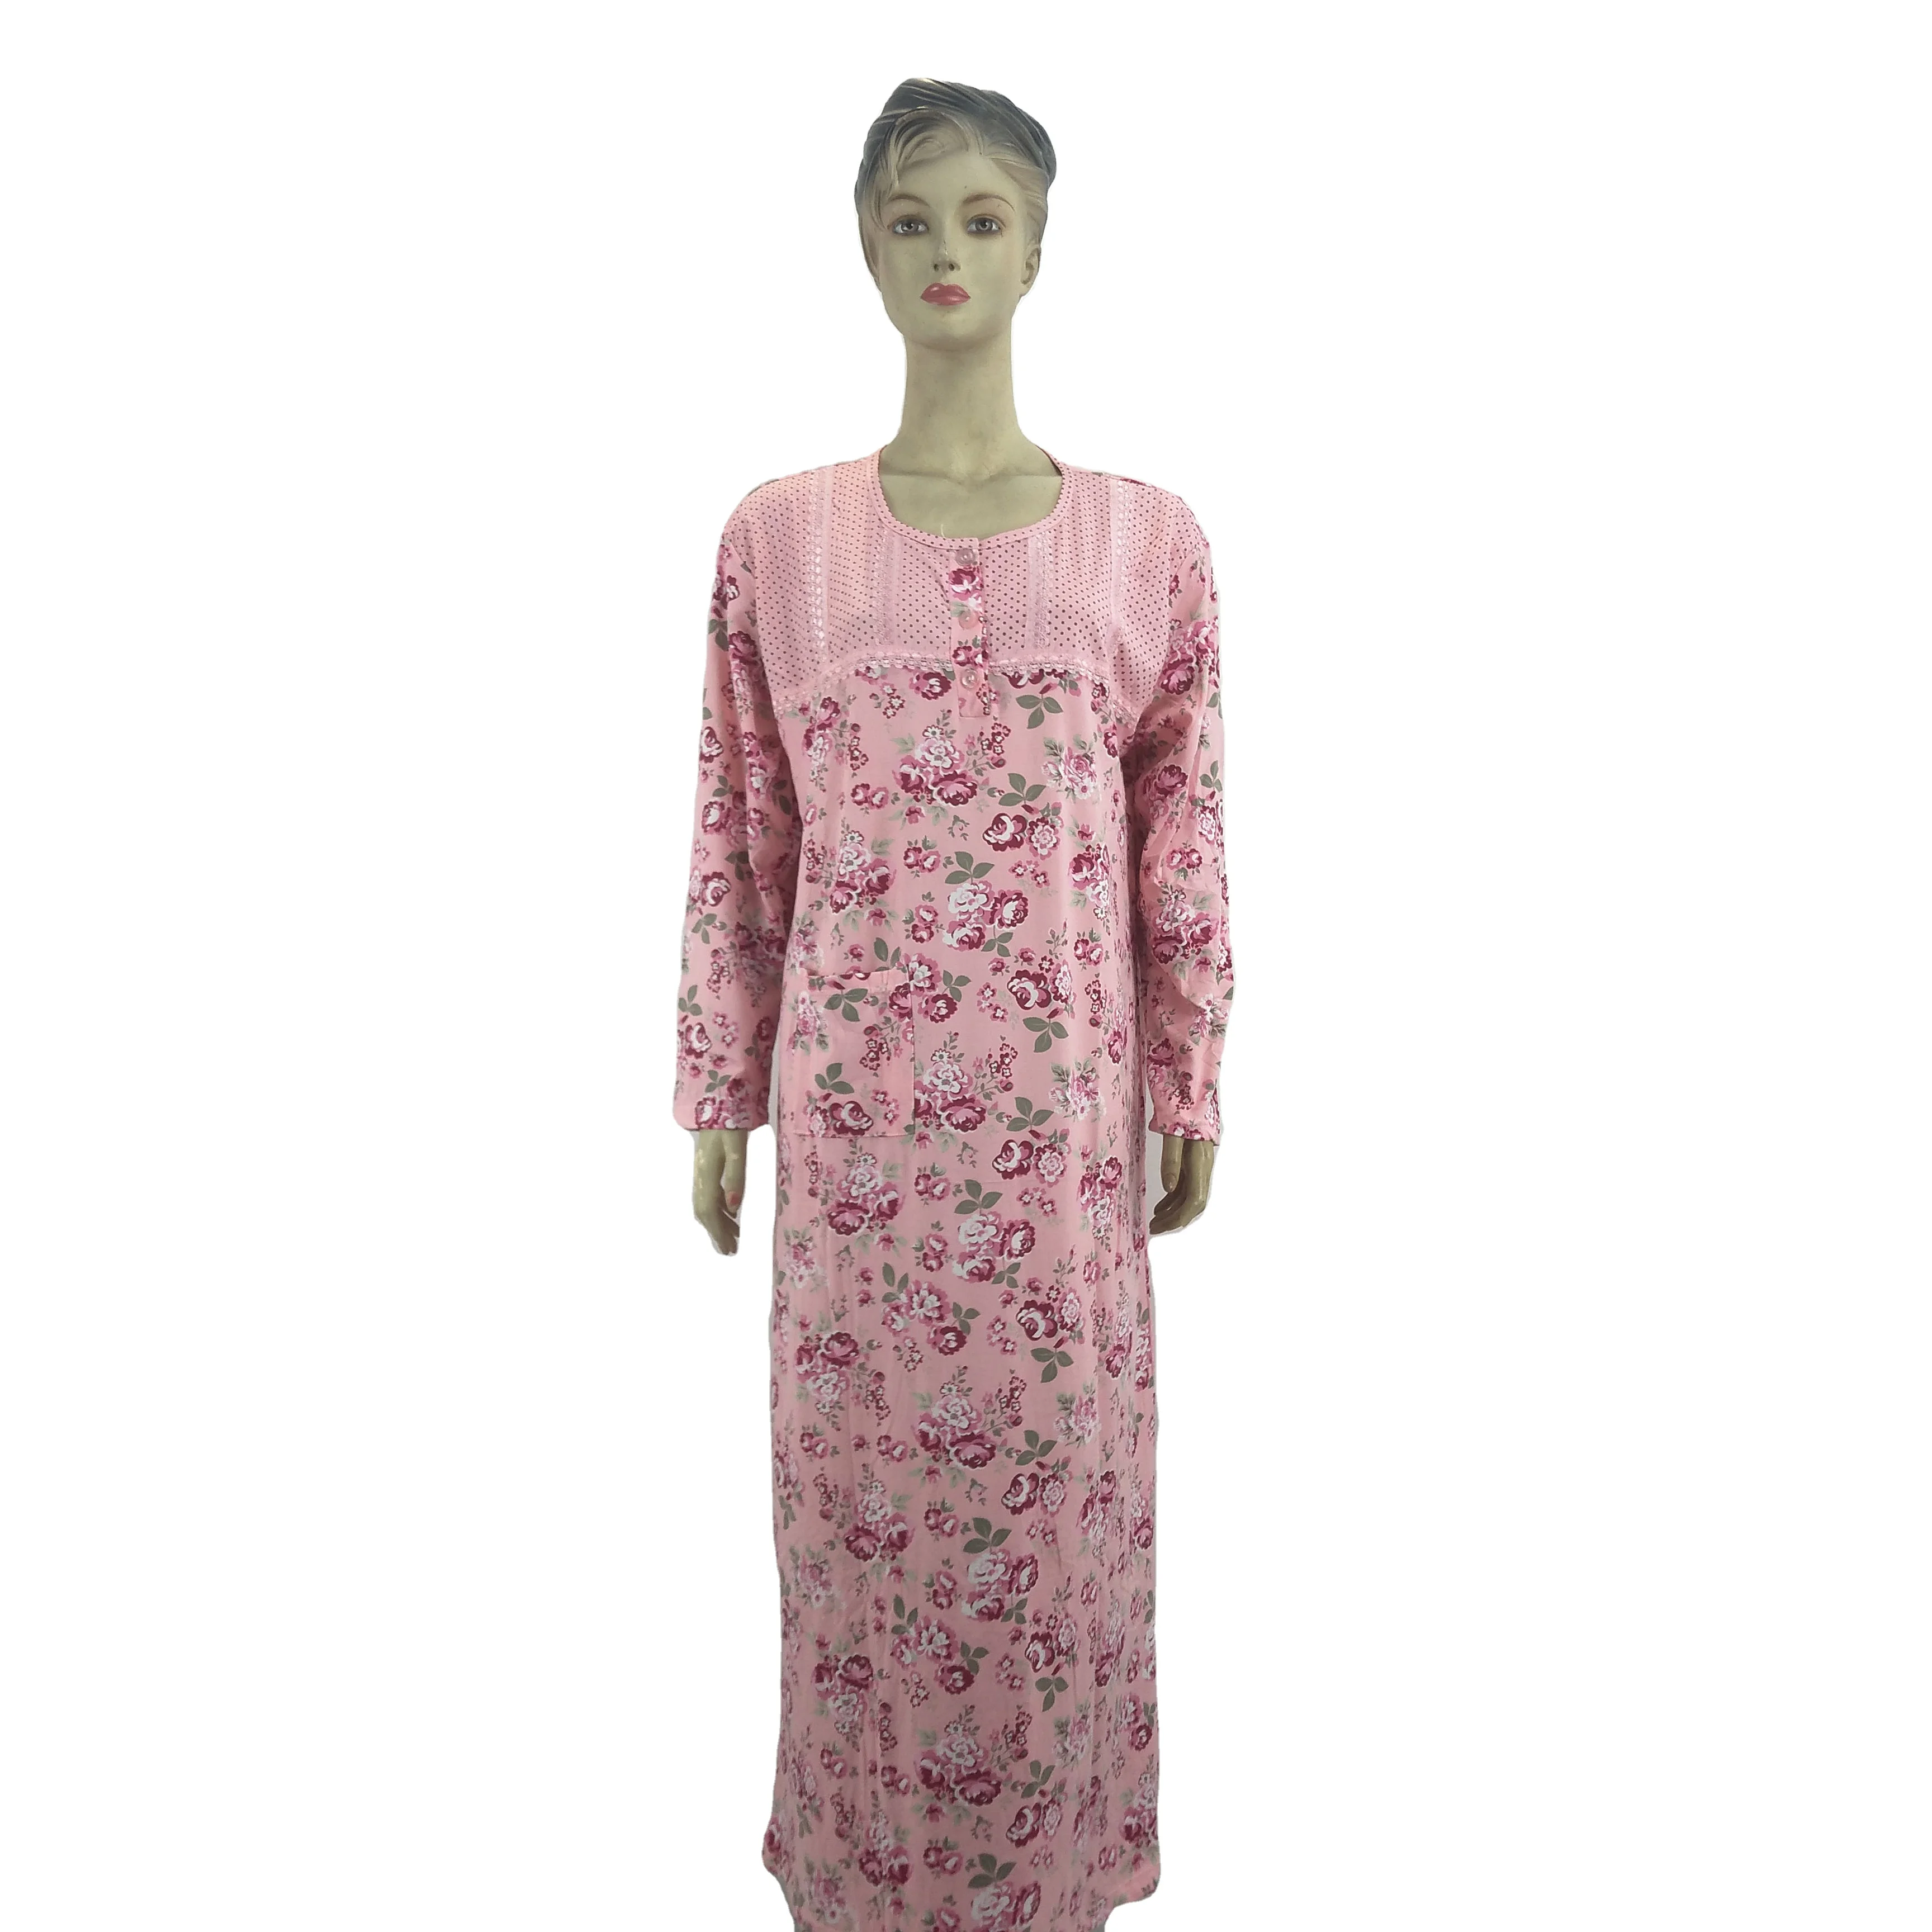 

Women Vintage neckline new craftWater soluble jacquard Sleepdress pyjamas home wear ladies Loungewear Comfortable Rayon Pajamas F